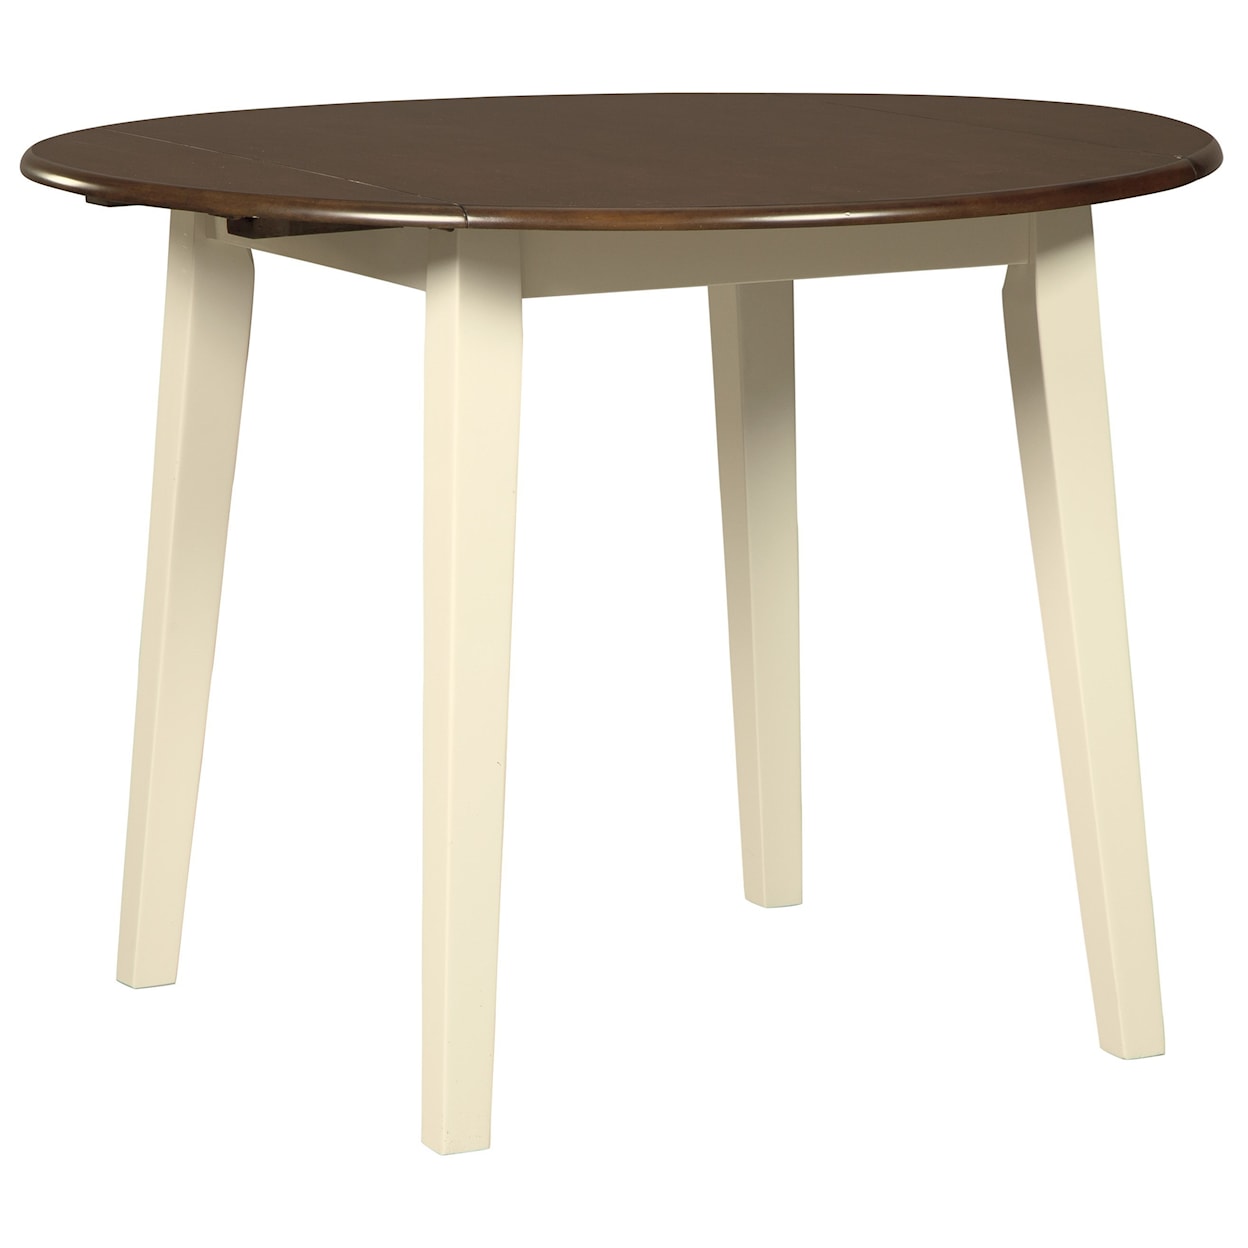 Signature Design by Ashley Furniture Woodanville 3-Piece Round Drop Leaf Table Set